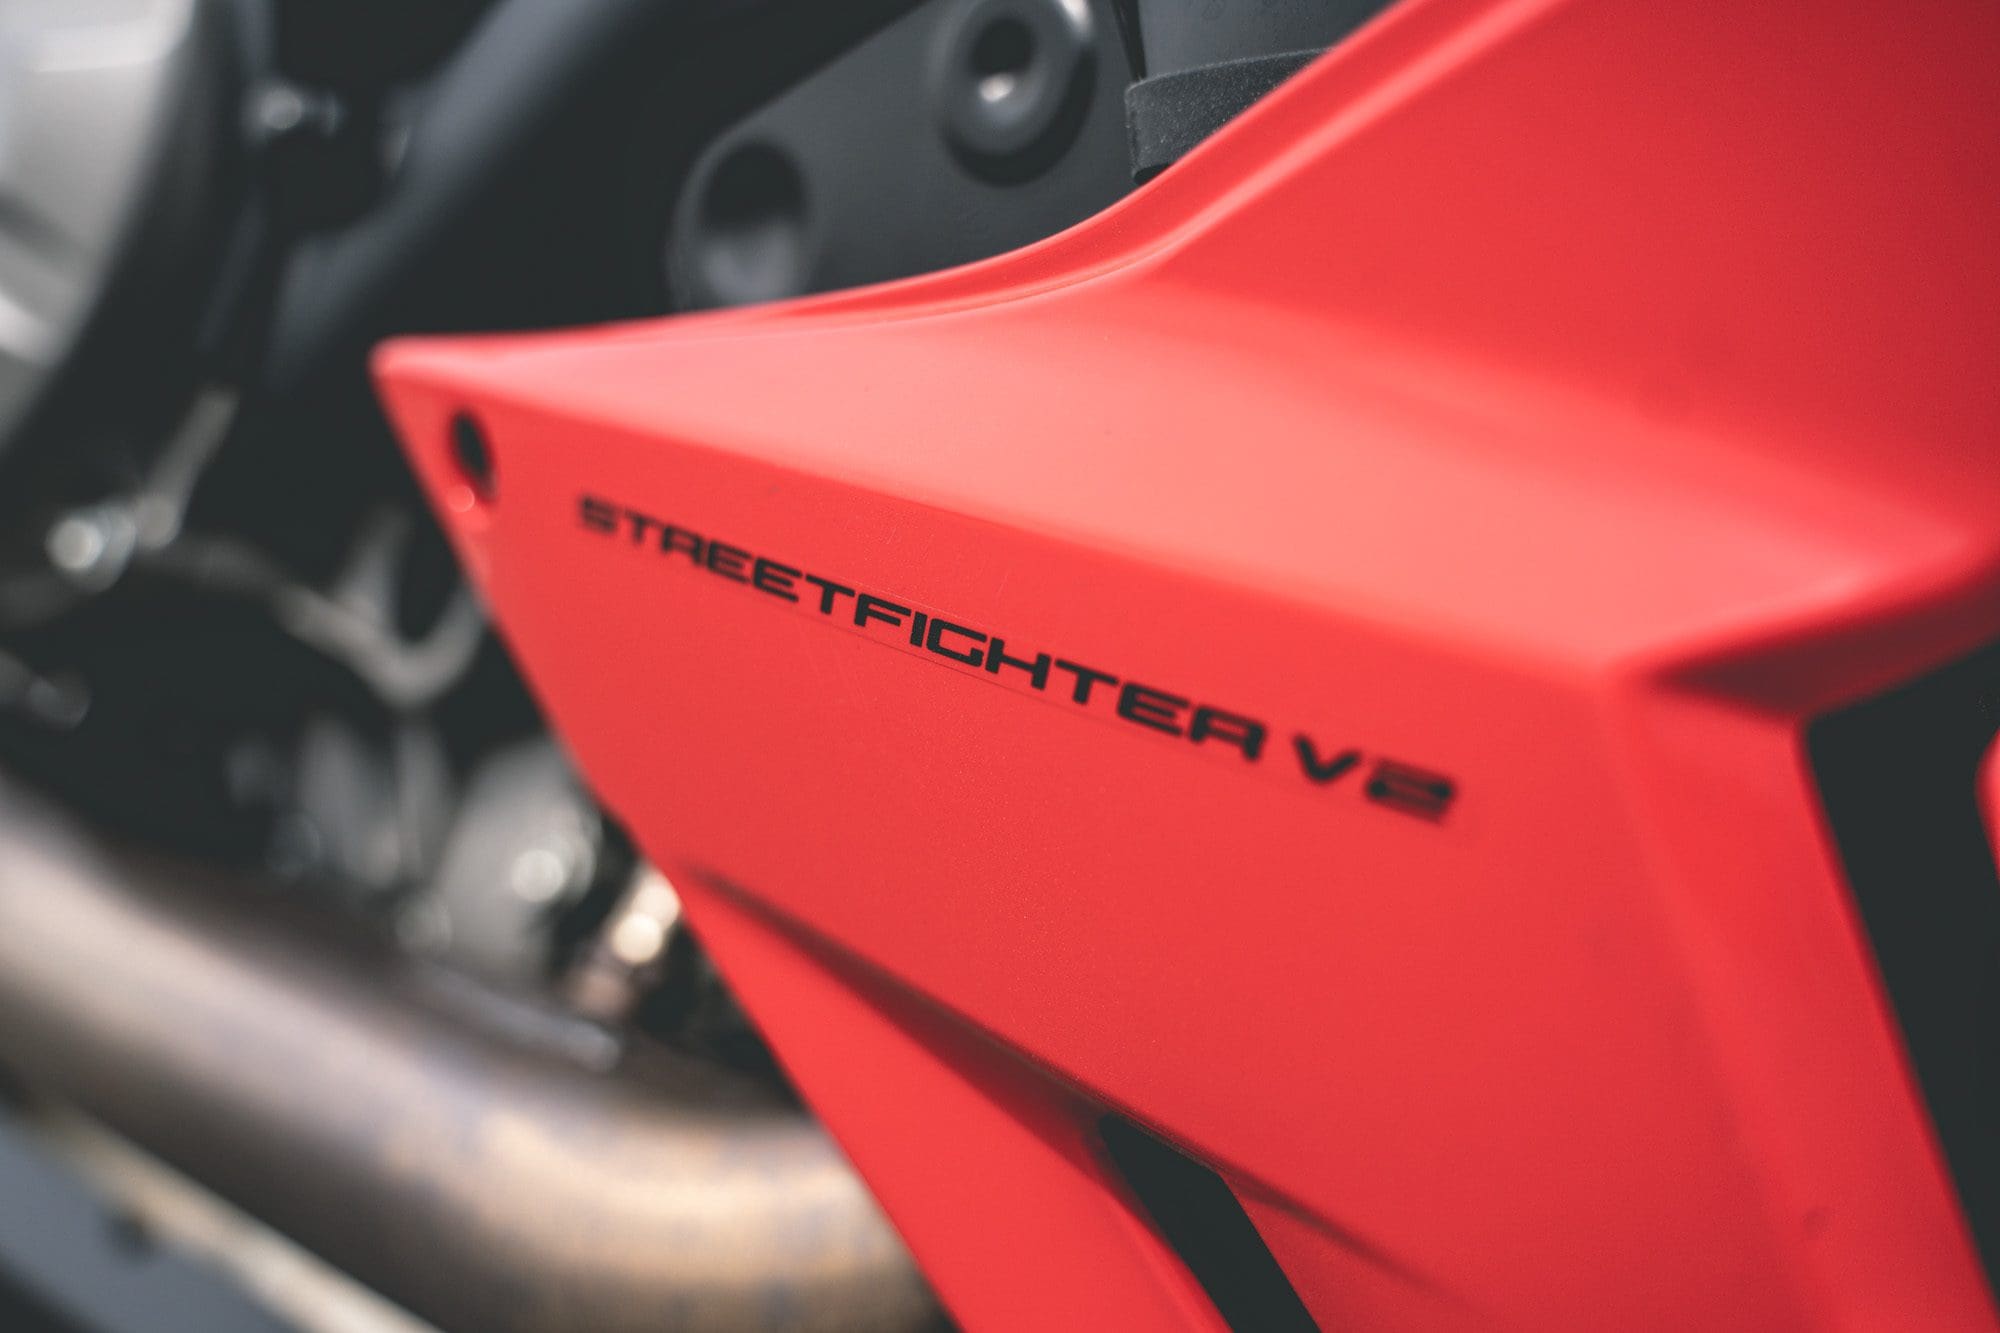 Streetfighter V2, Italiaans kunstwerk: de nieuwe <strong>Ducati Streetfighter V2</strong>